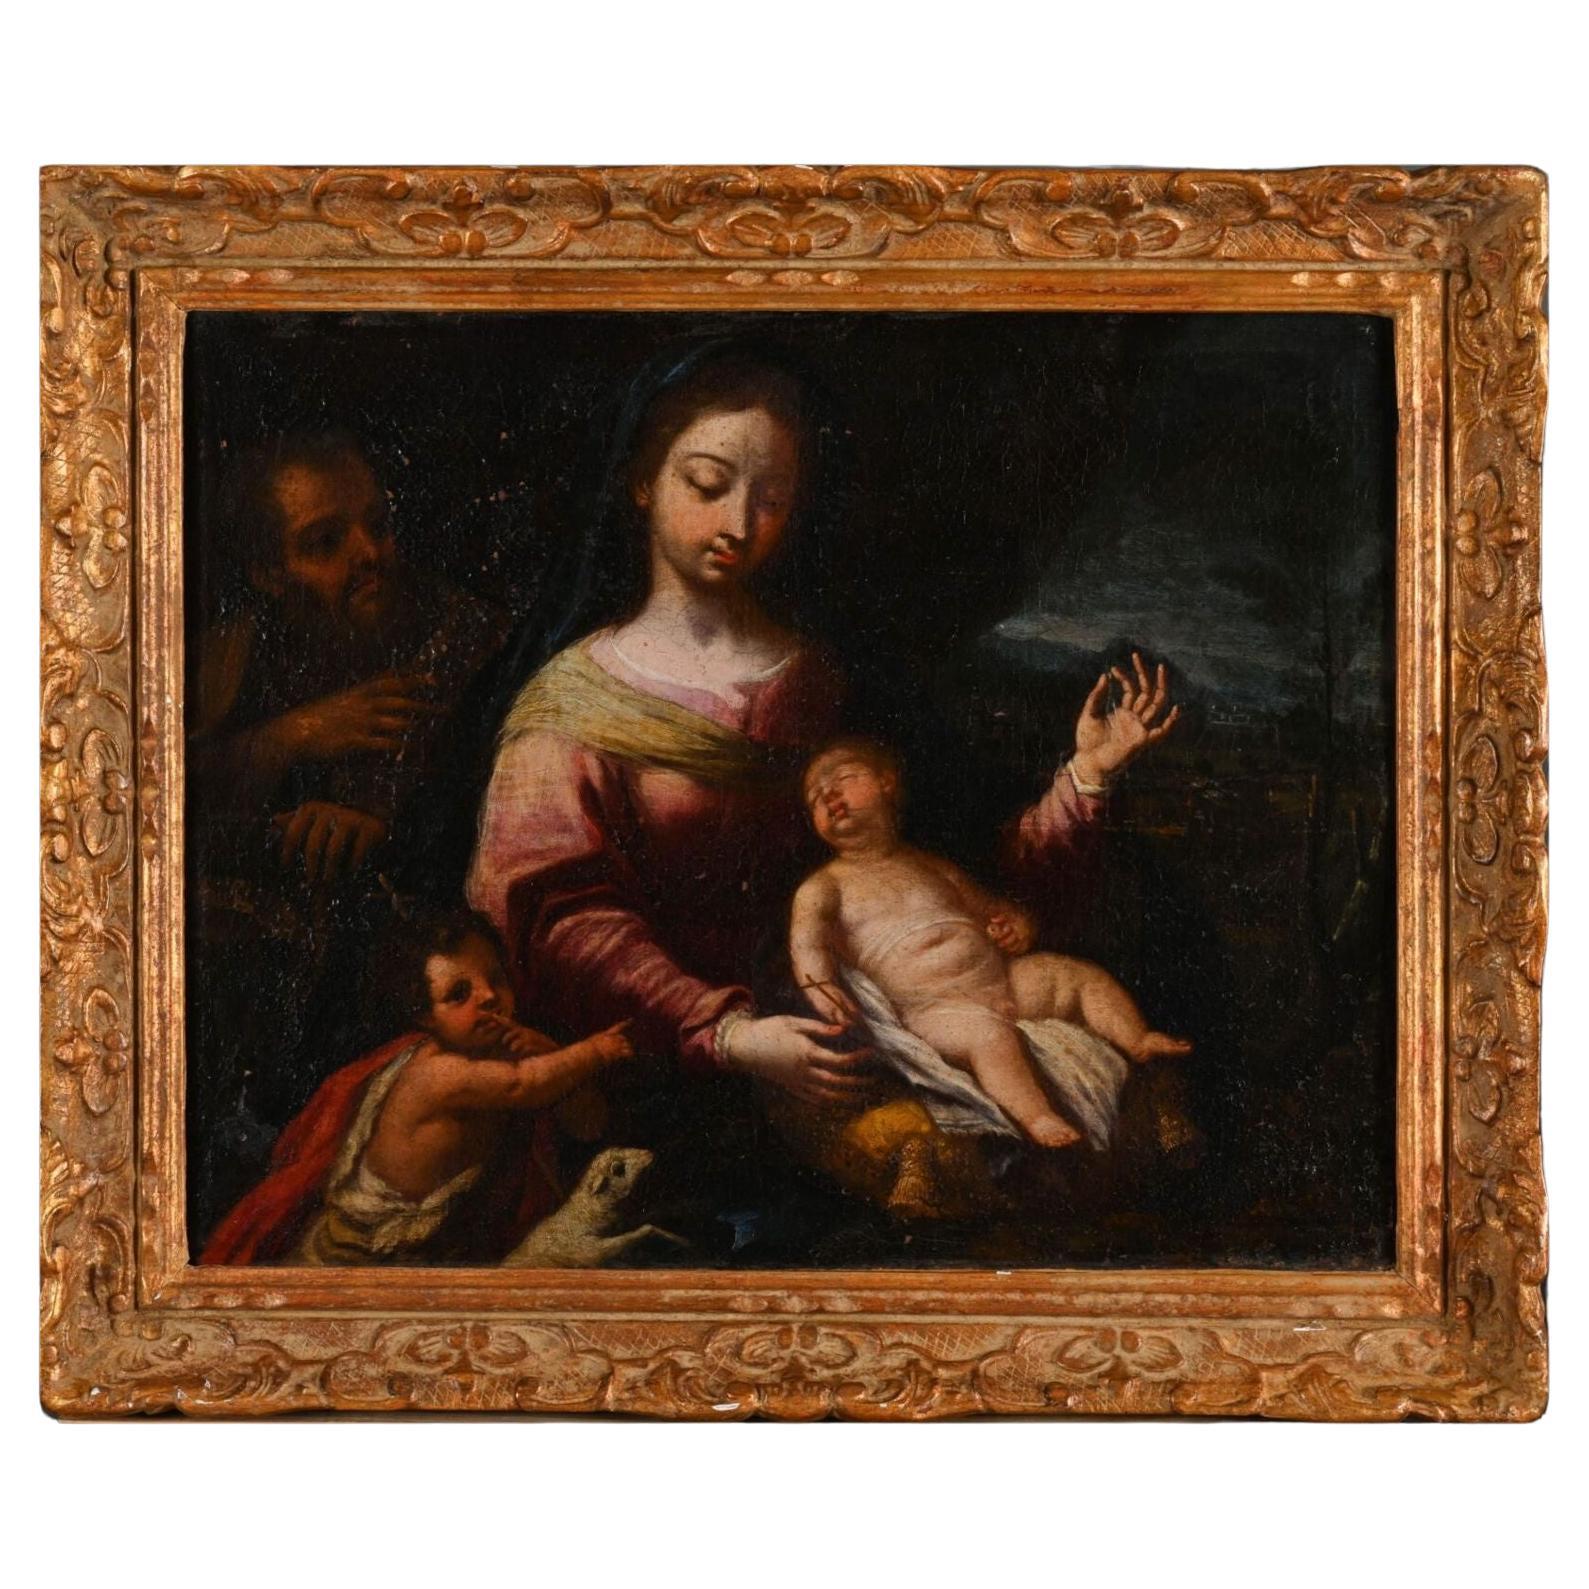 17th century Italian School  "Holy Family with St. John the Baptist"